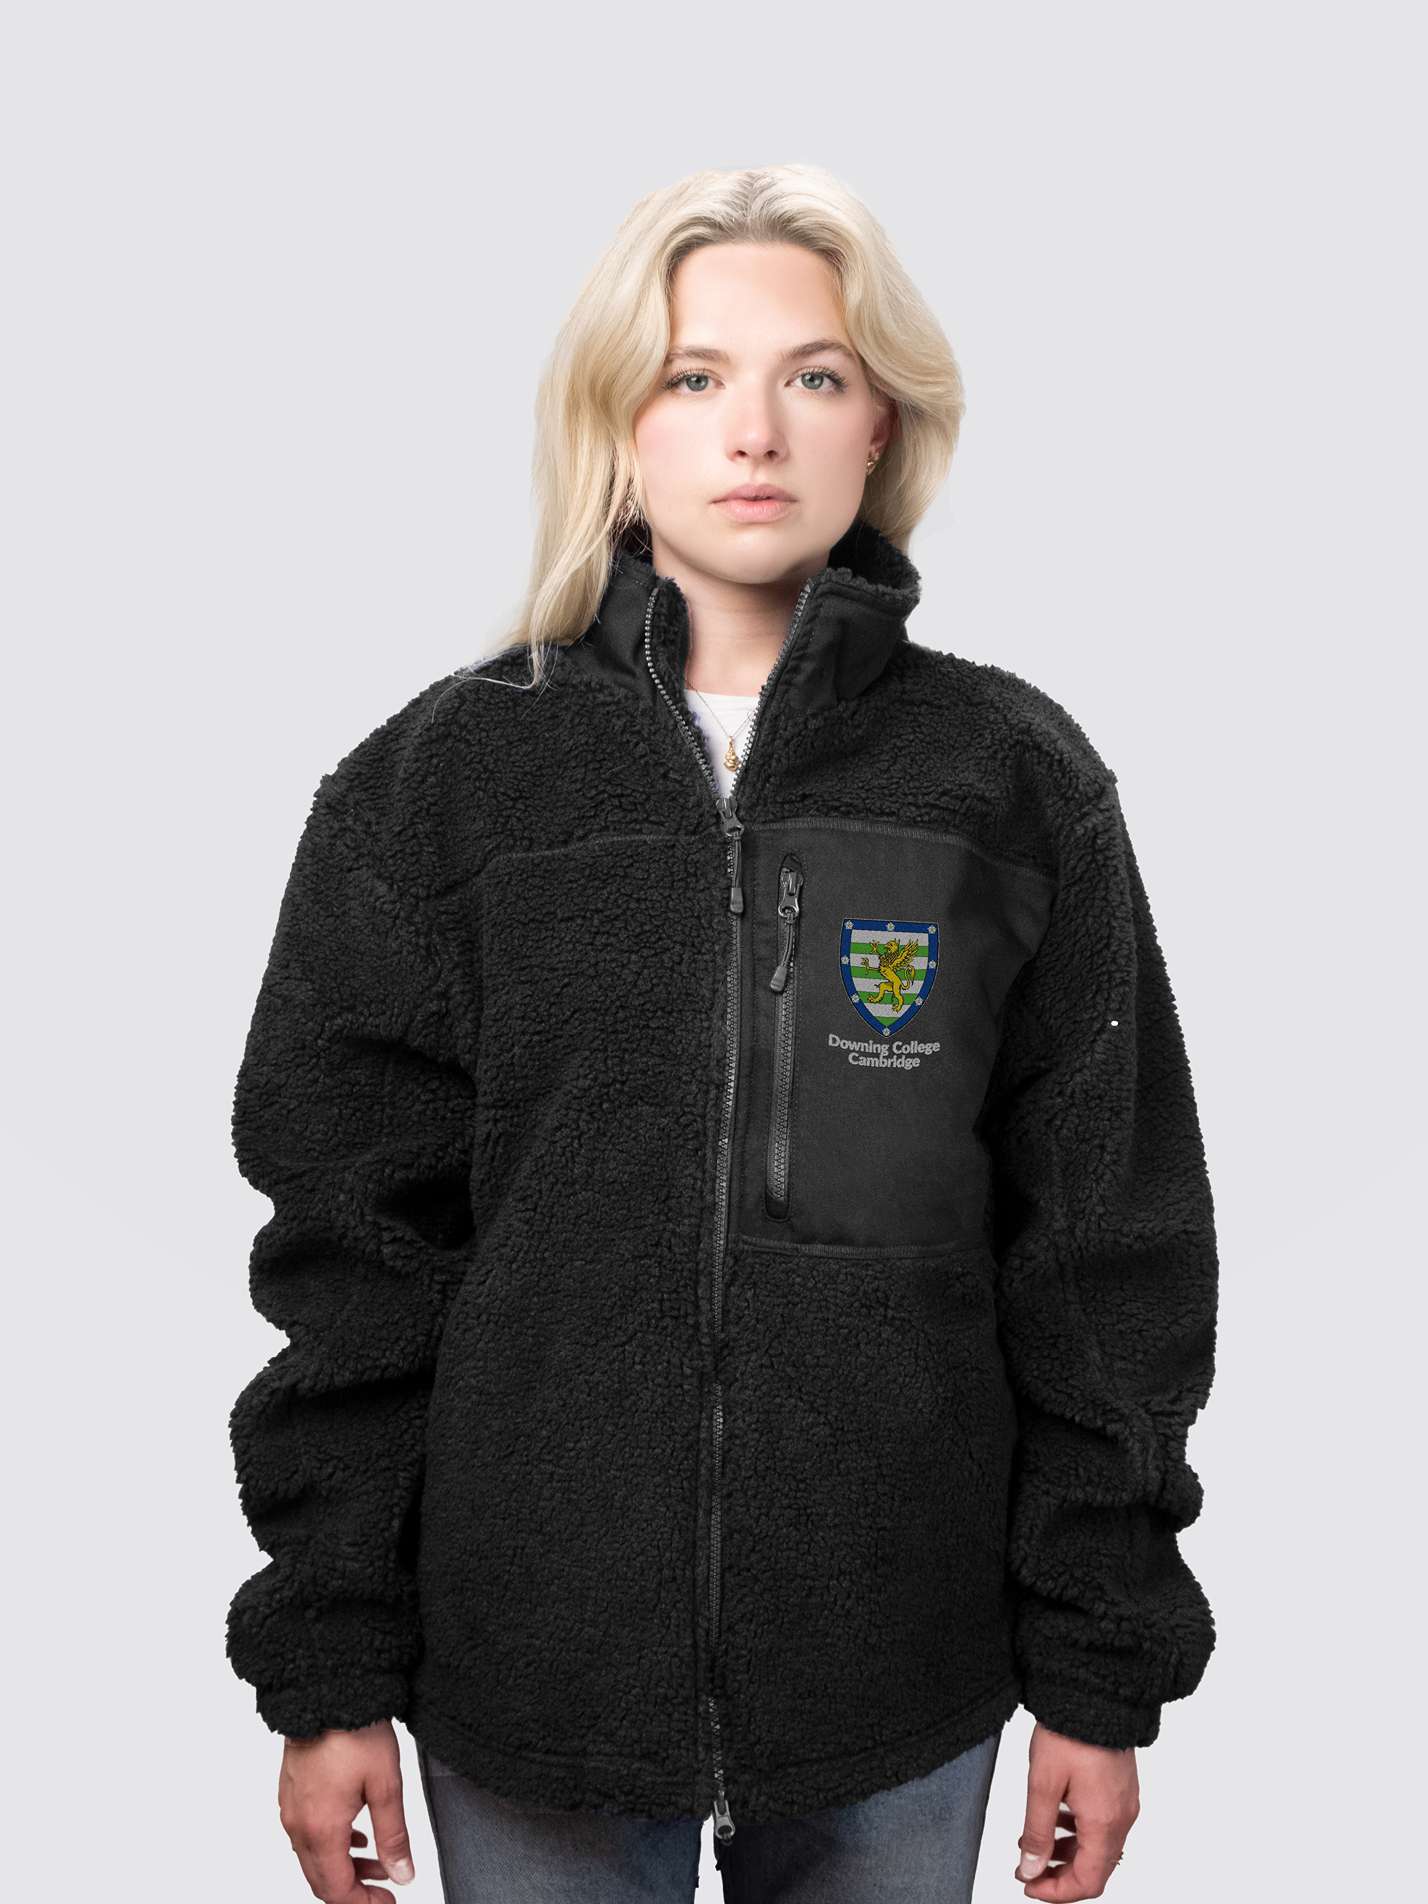 Downing College Cambridge JCR Unisex Fluffy Sherpa Fleece Jacket